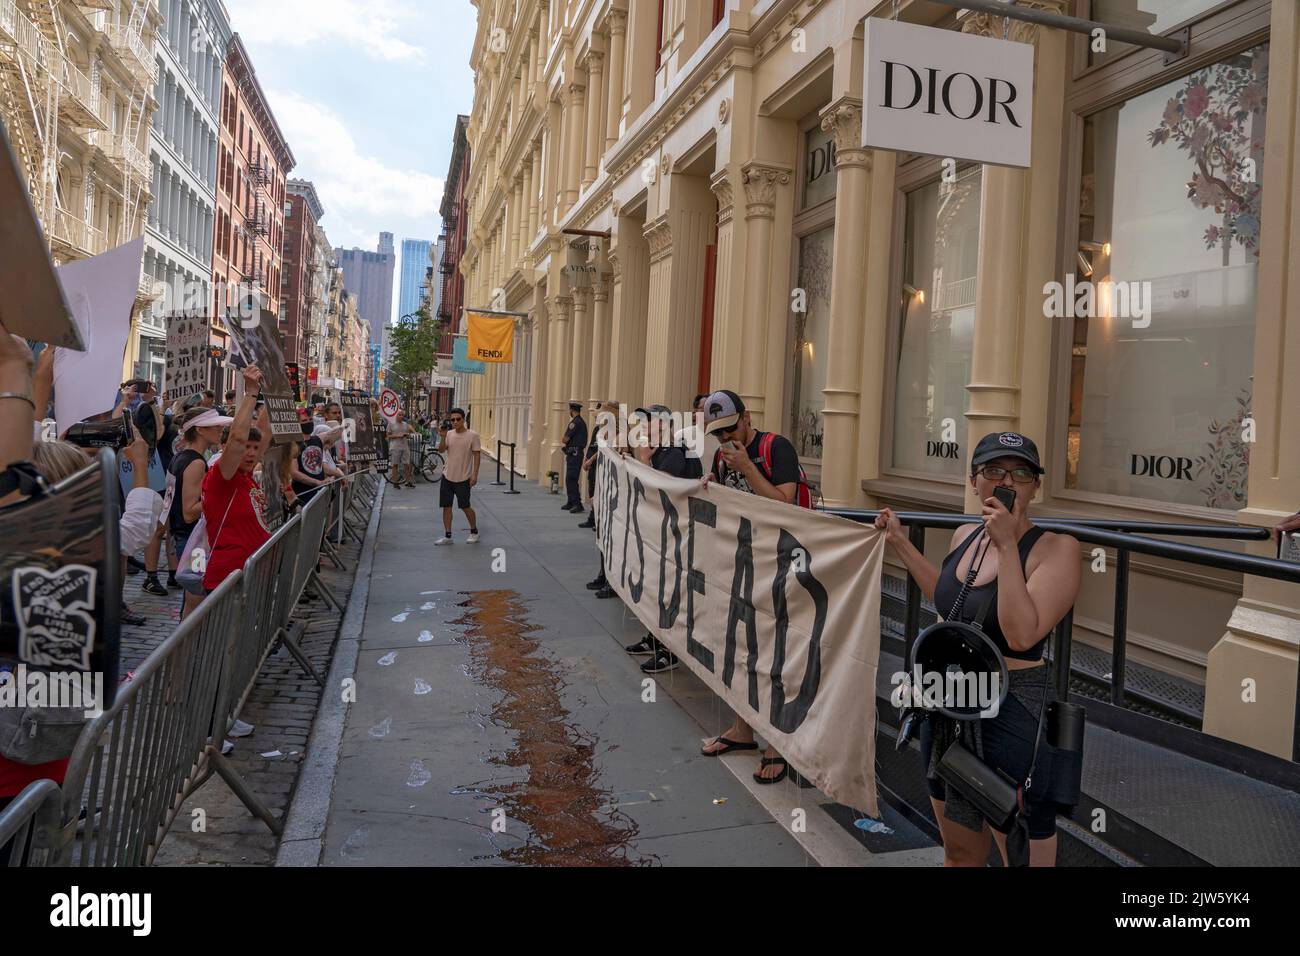 Christian Dior Stock Photo - Download Image Now - SoHo - New York